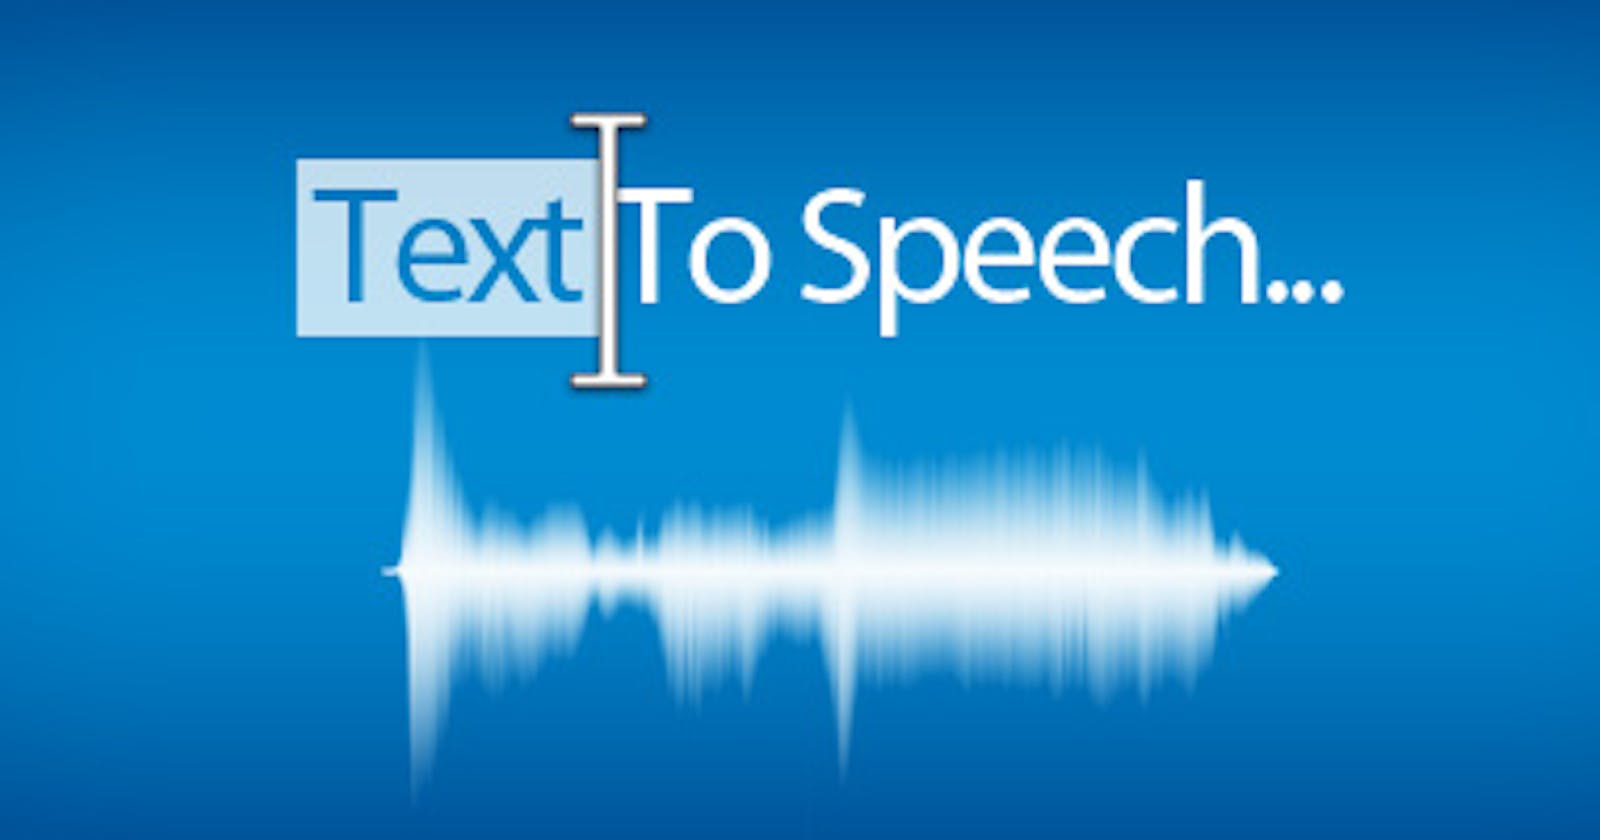 Text to Speech as an Educational Tool